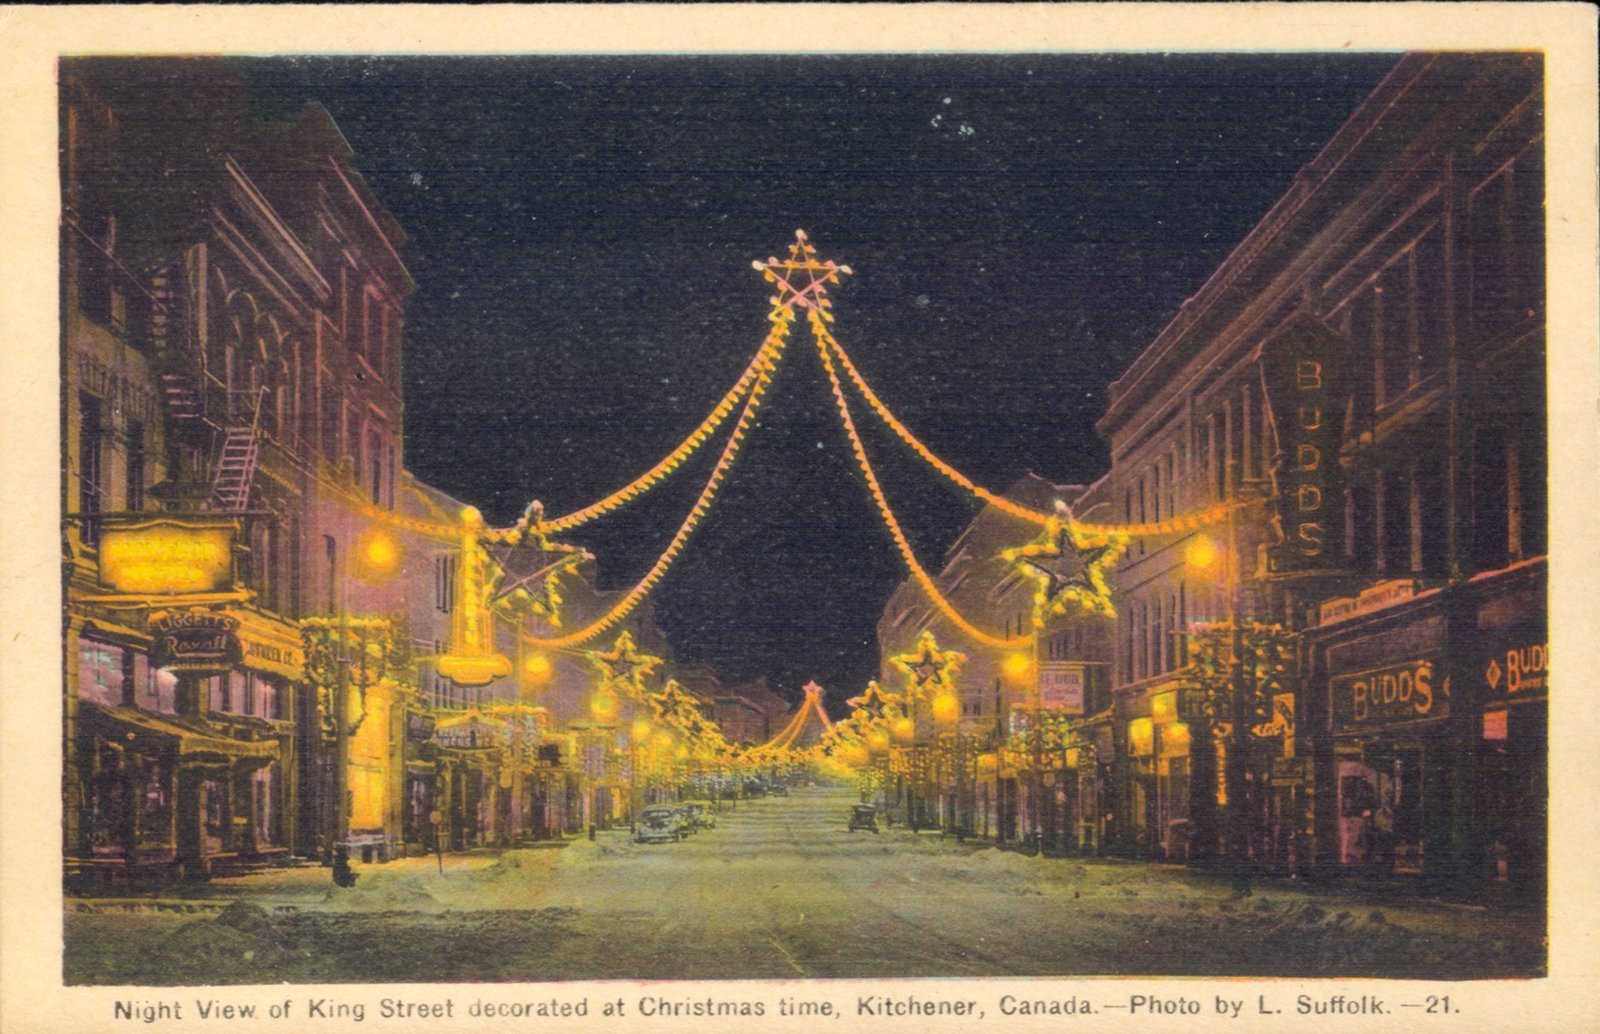 King Street Christmas Decorations, Kitchener, Ontario: Waterloo Public